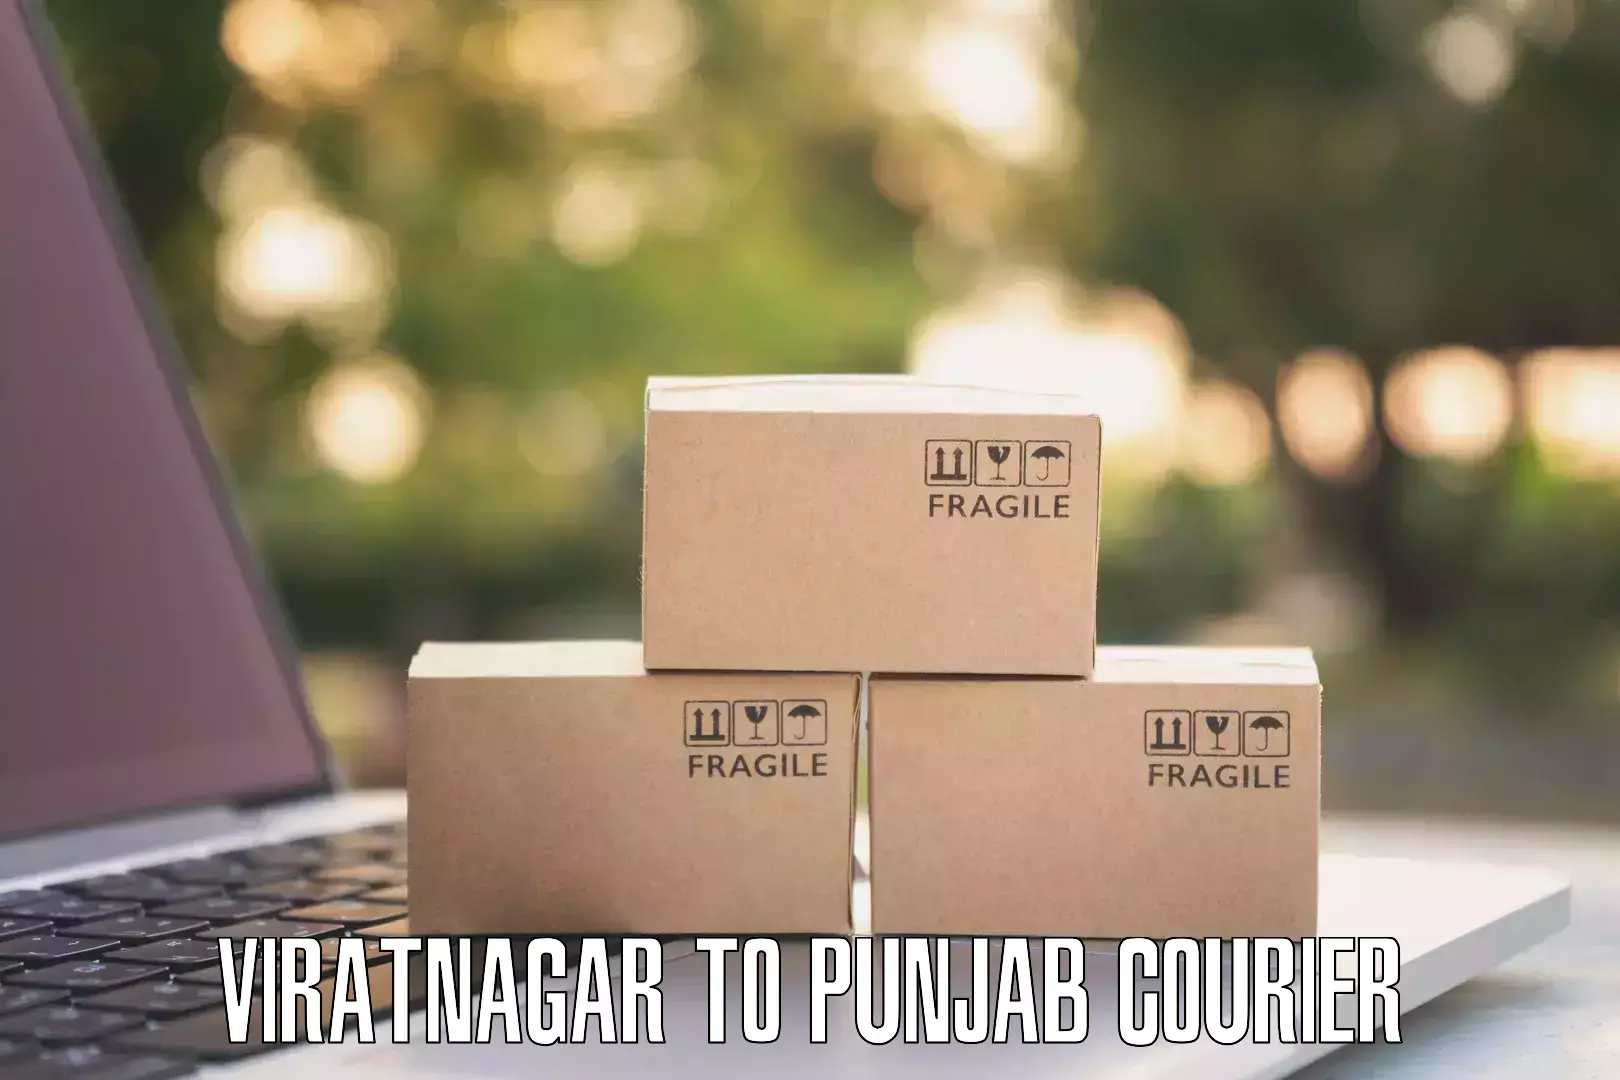 Subscription-based courier Viratnagar to Samana